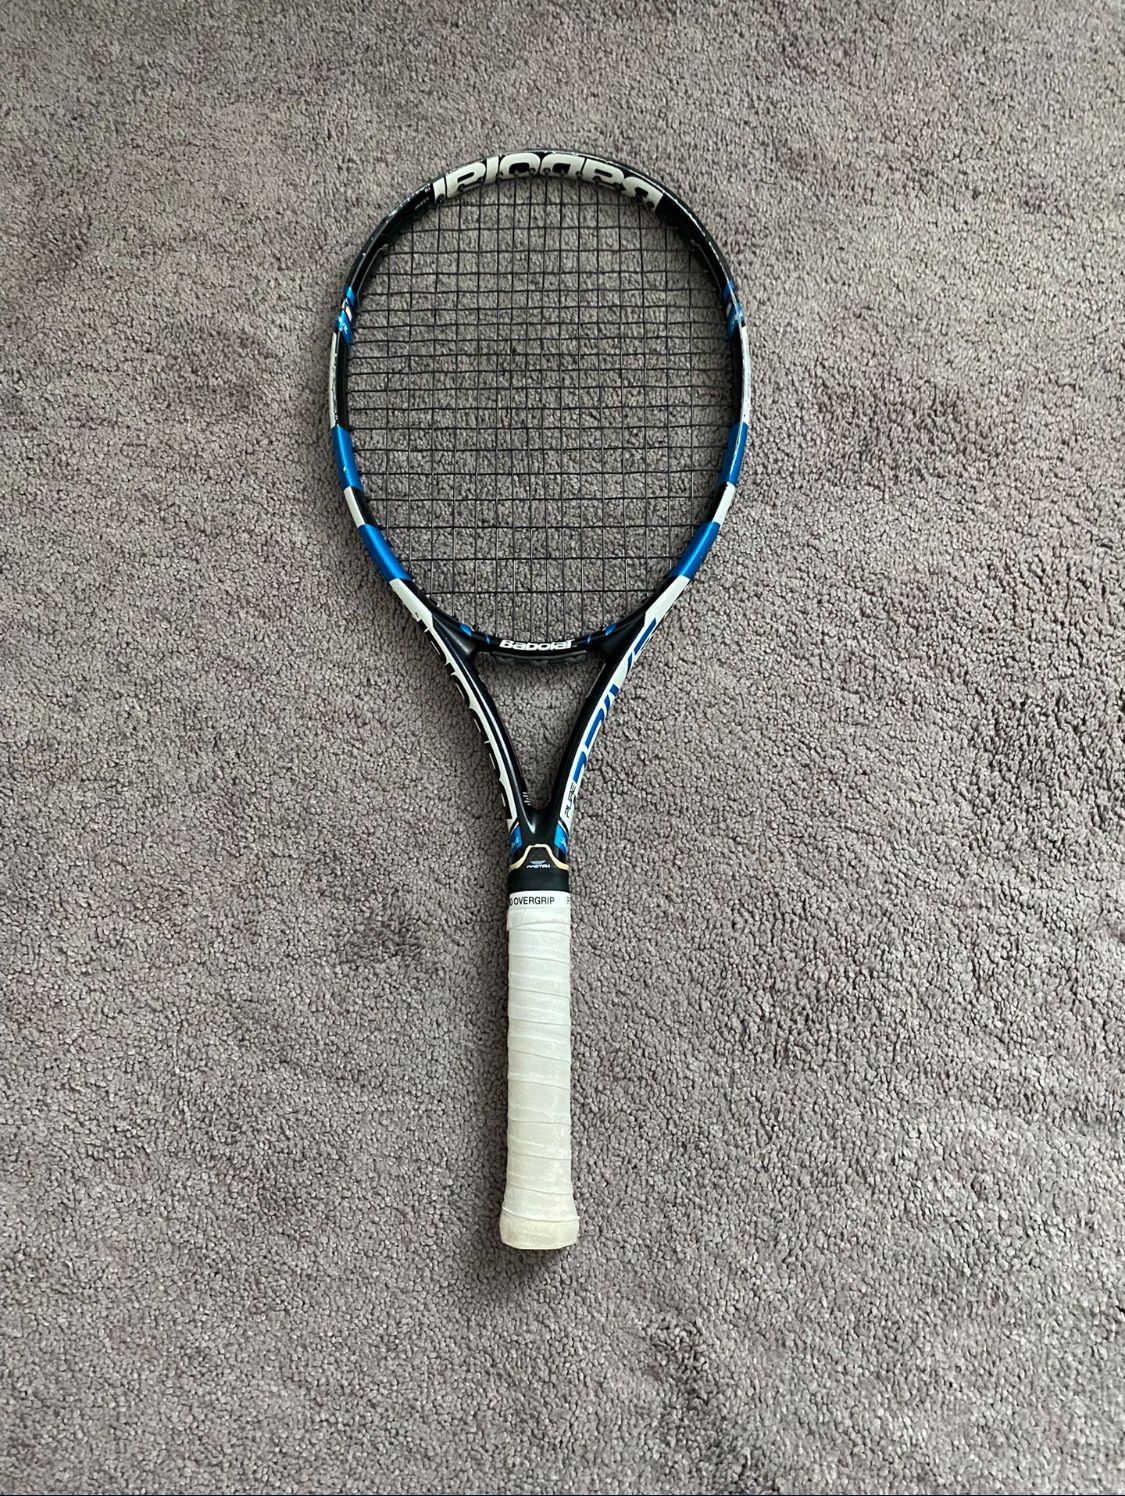 Babolat Pure Drive Tennis Racket